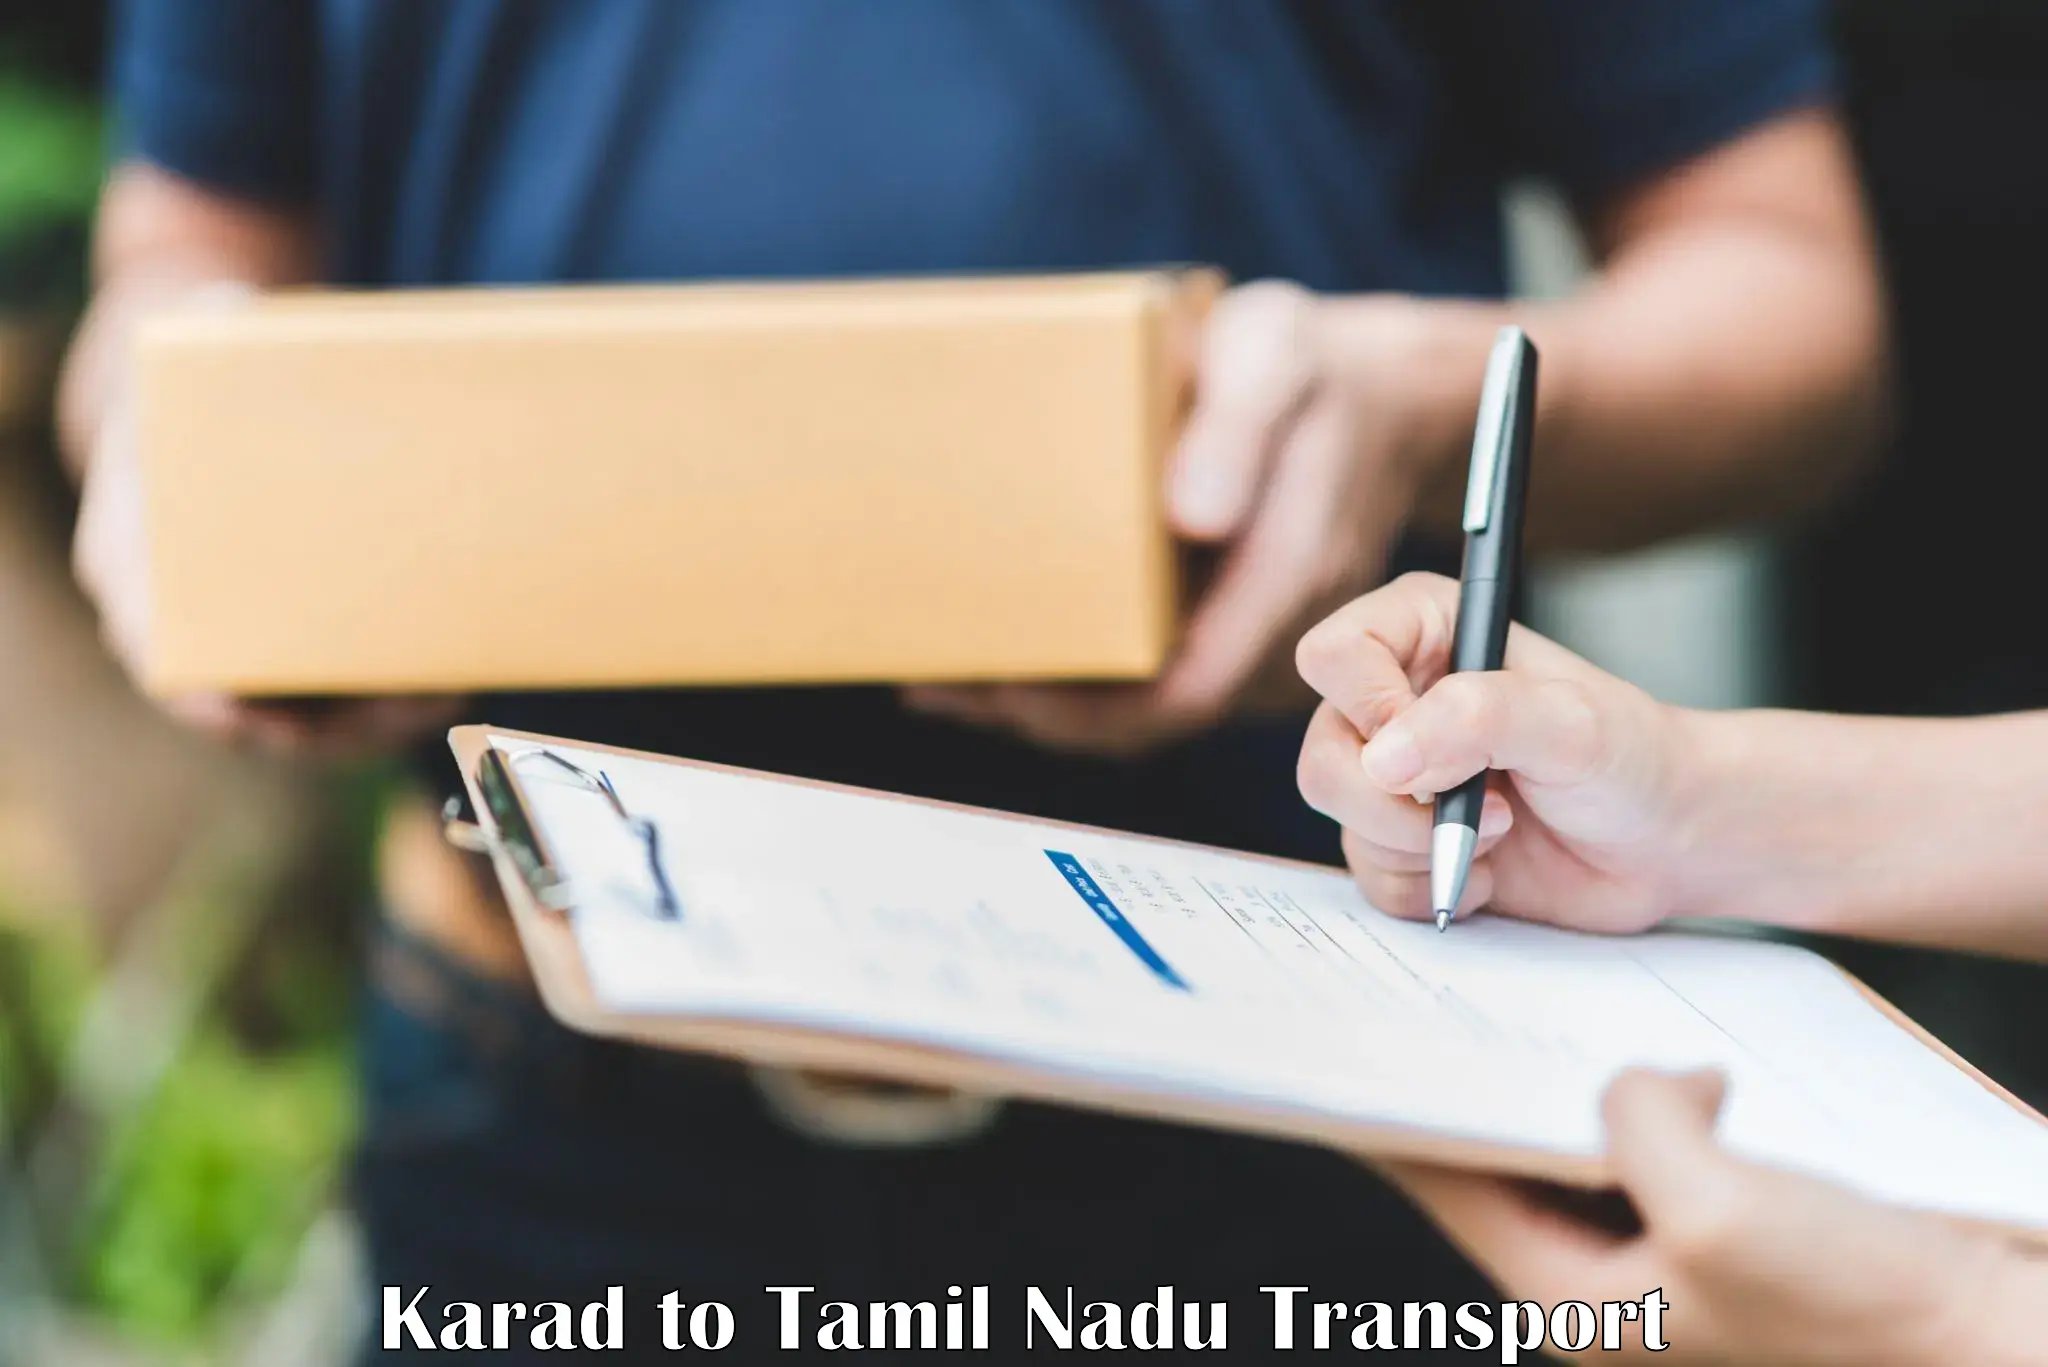 Online transport service Karad to Thiruvarur